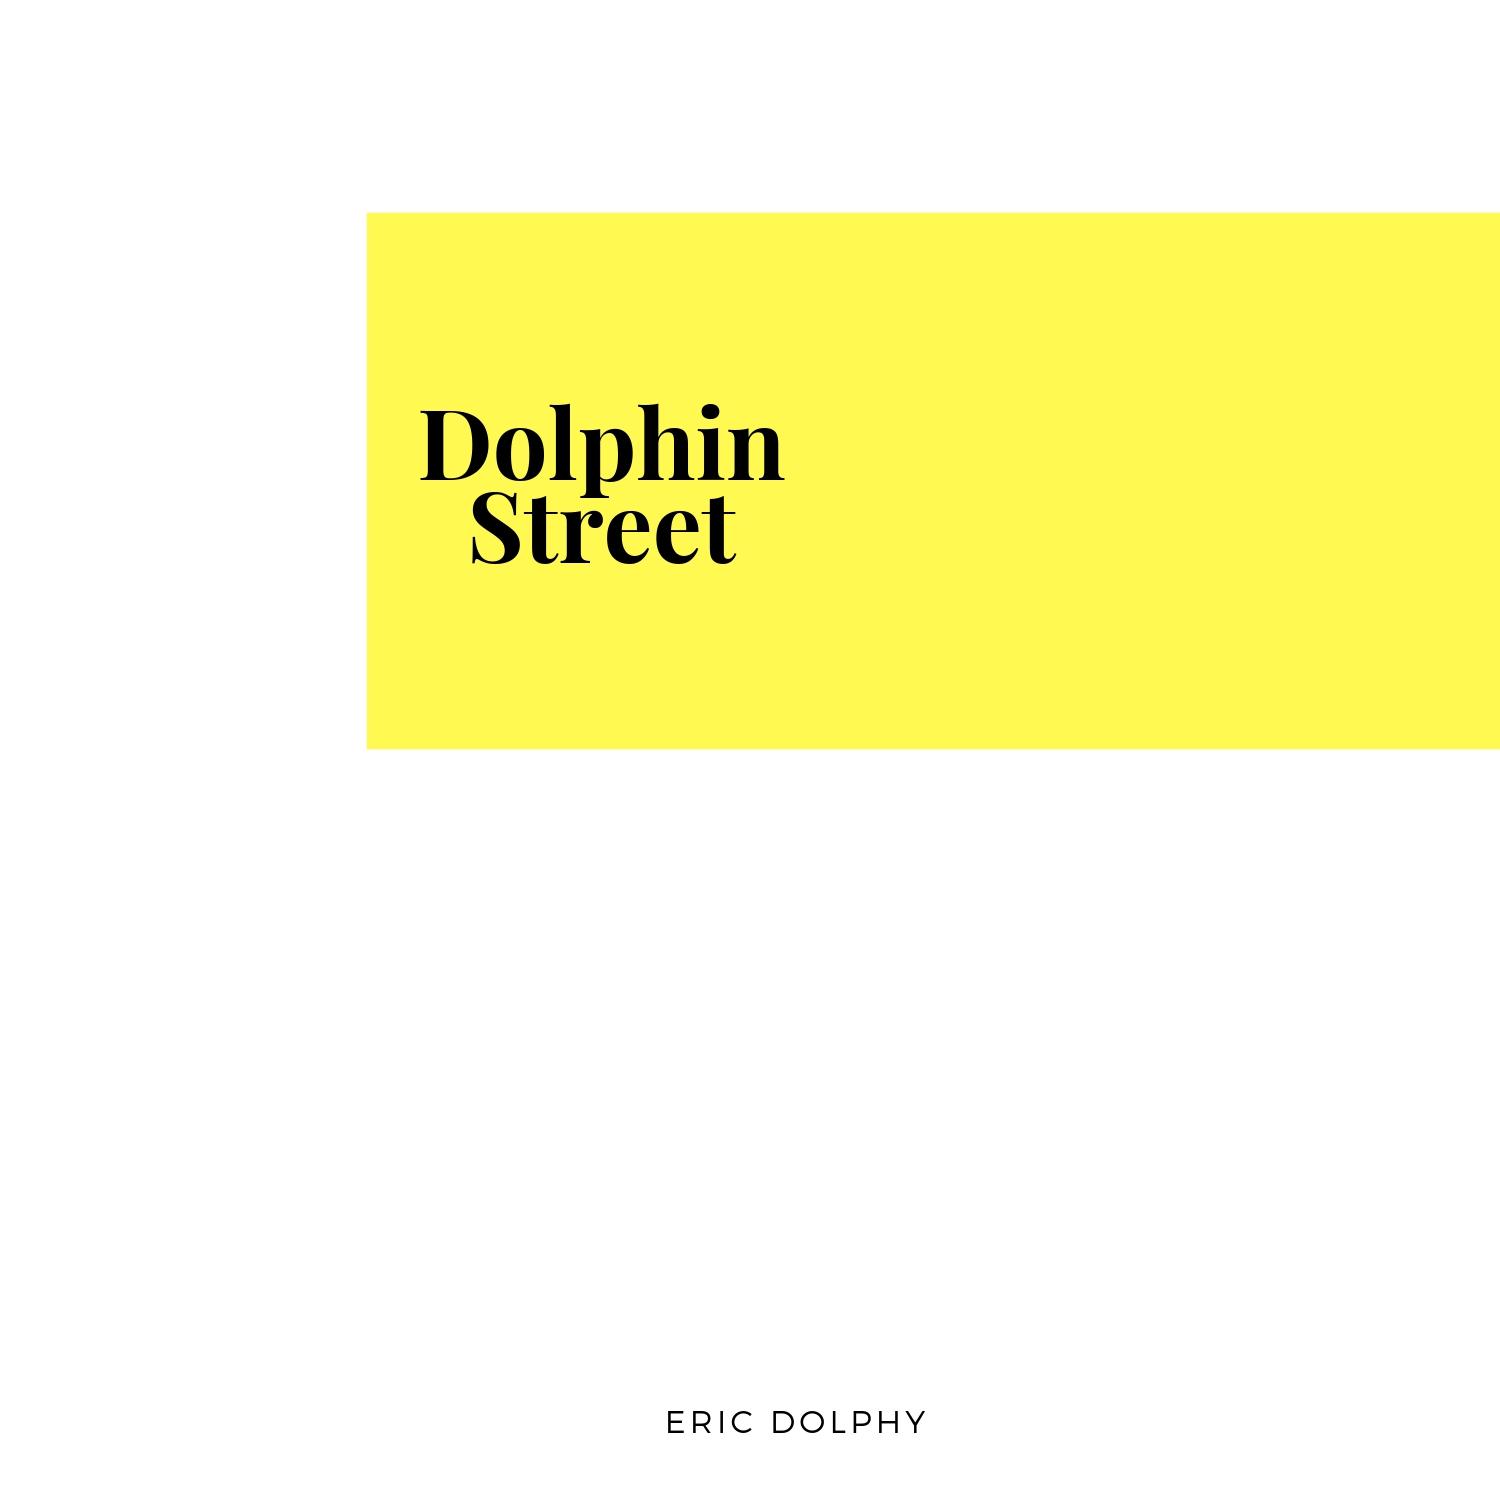 Dolphin Street